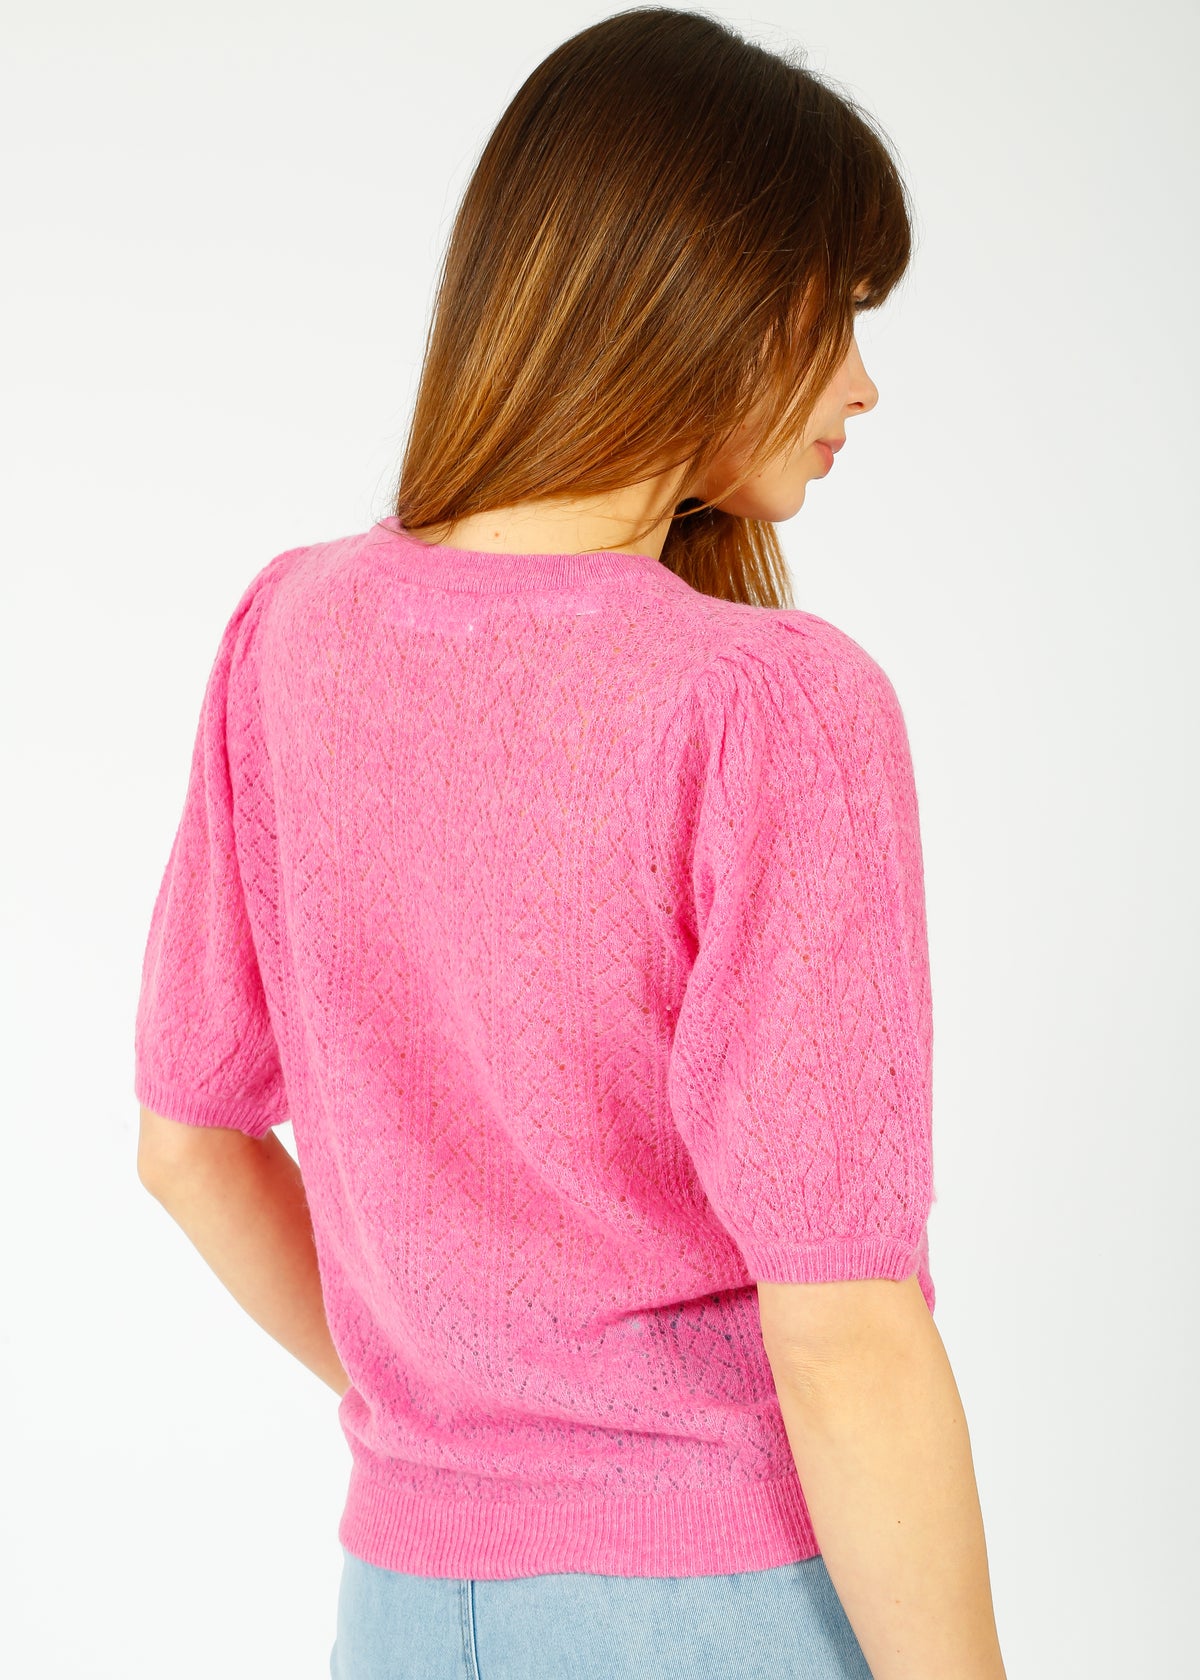 SLF Magde Knit in Phlox Pink